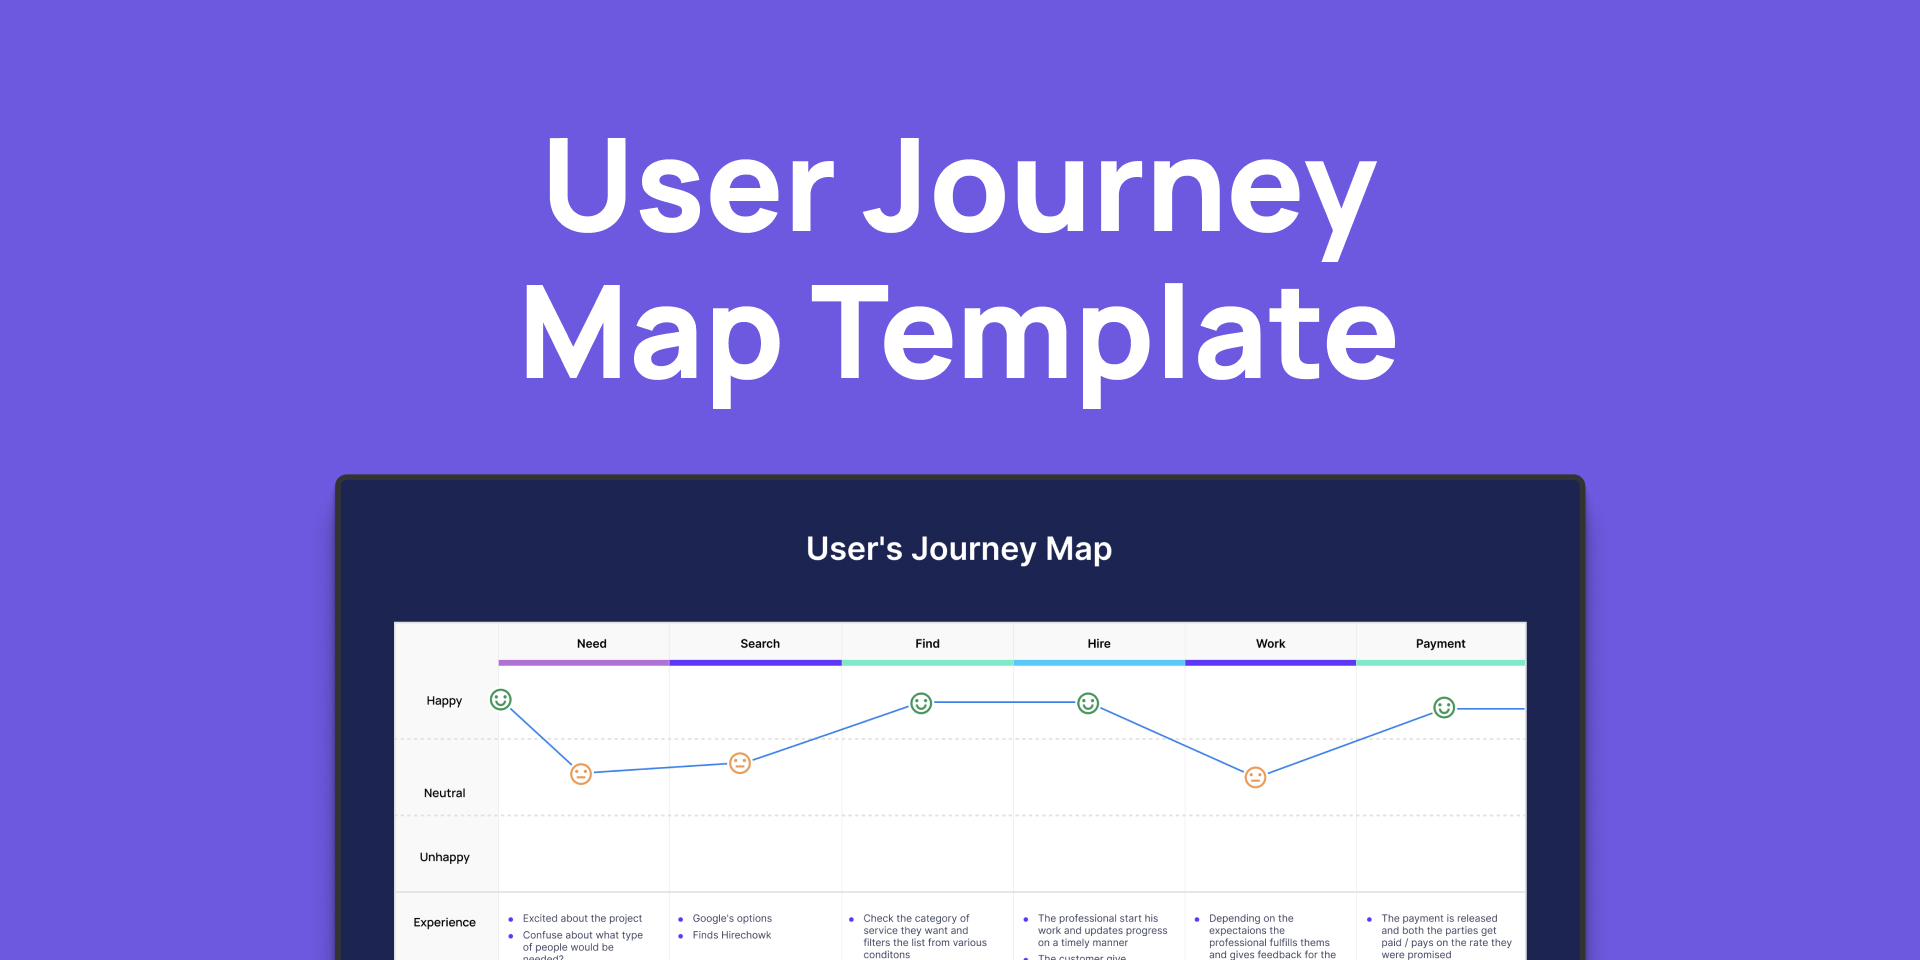 User Journey Map Template by Saroj Shahi